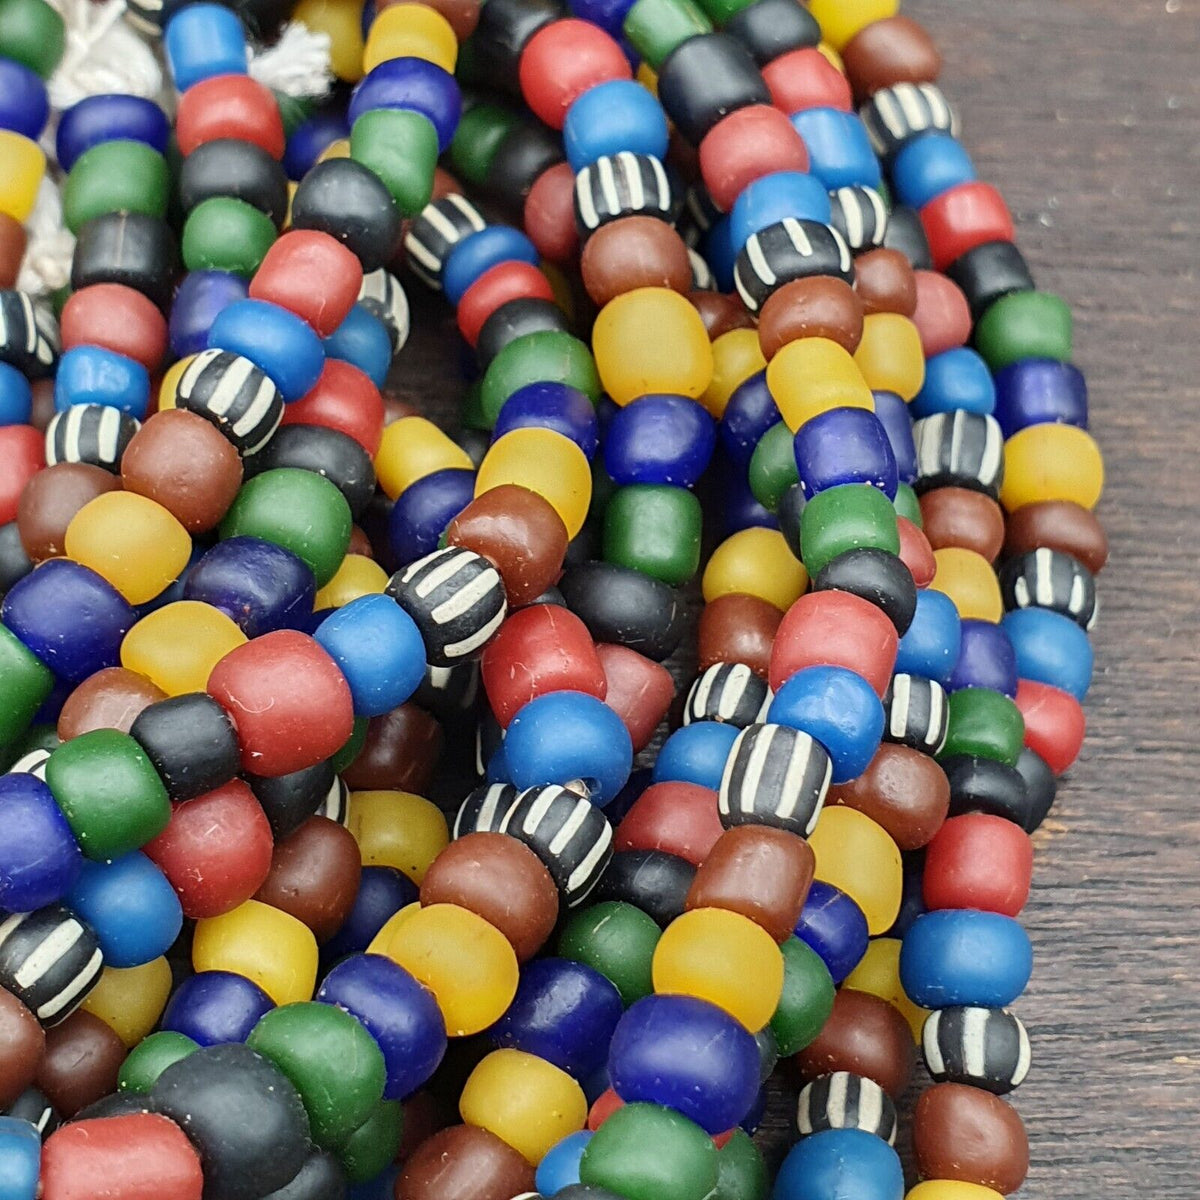 20 strands lot Vintage old mix color Glass Beads Long Necklace 5.5-6.5 mm